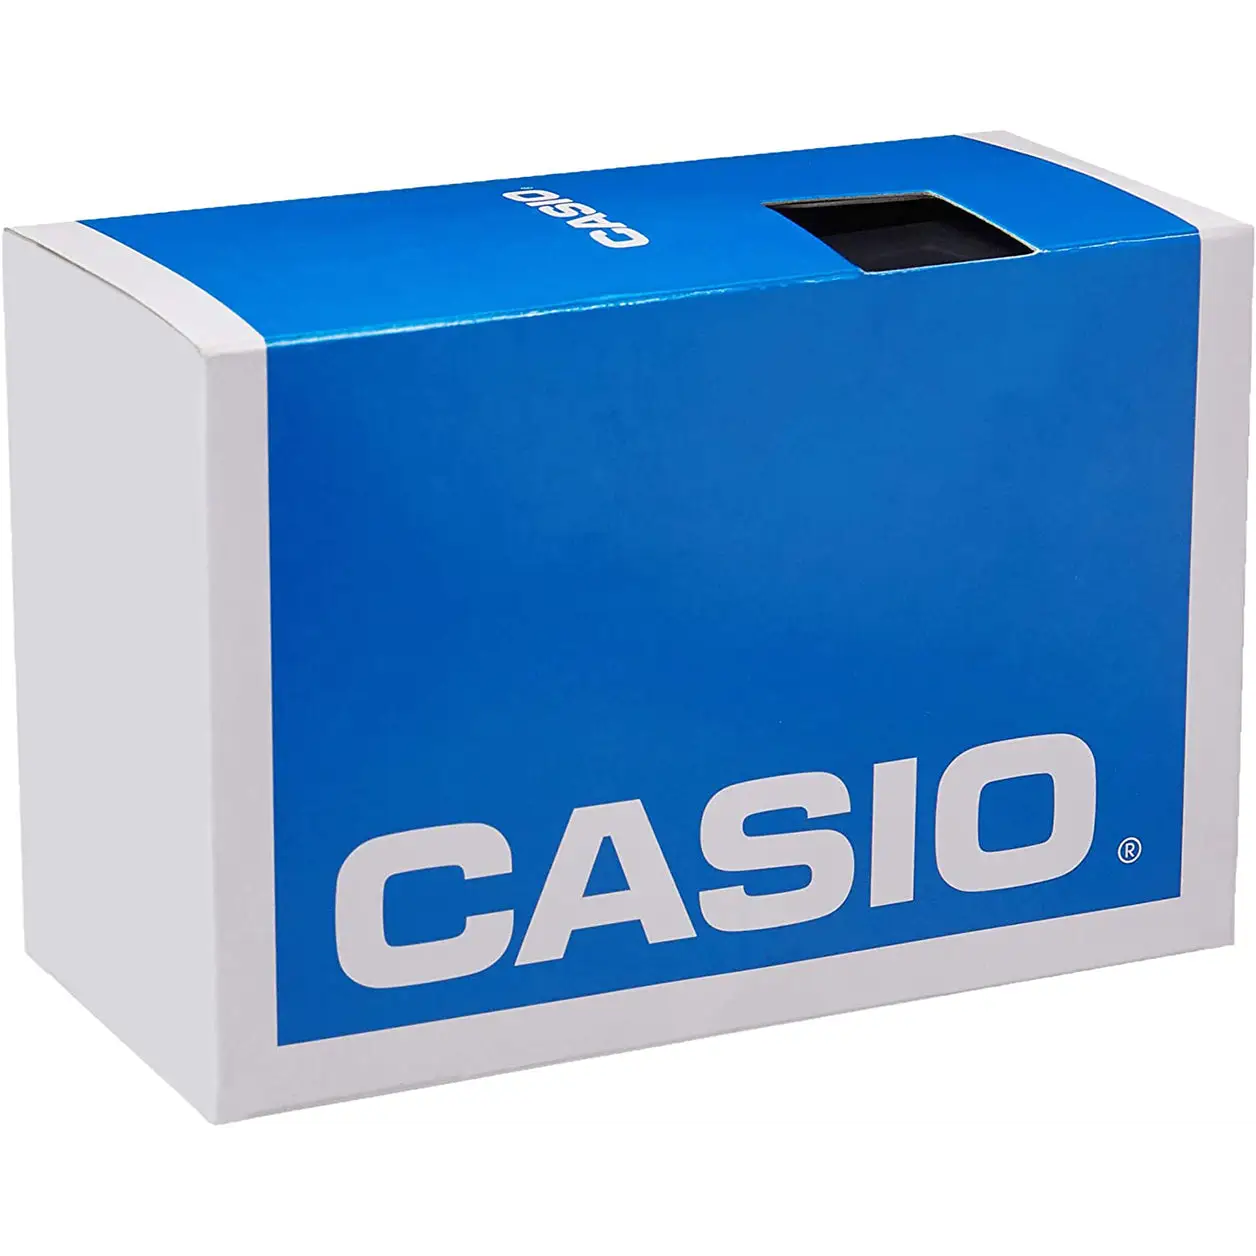 Casio Men’s Digital 10-Year Battery 100m Grey/Black Resin